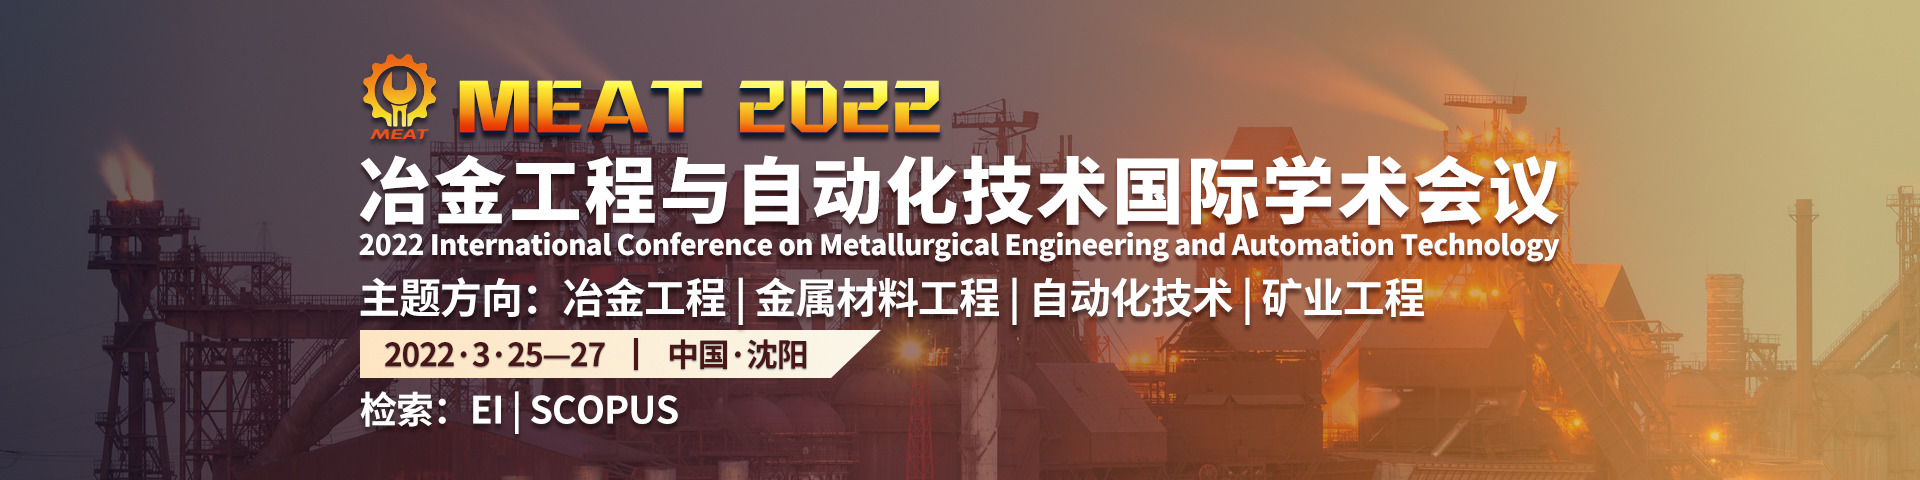 3月沈阳-MEAT2022会议艾思平台banner-林倩瑜-20210907.jpg